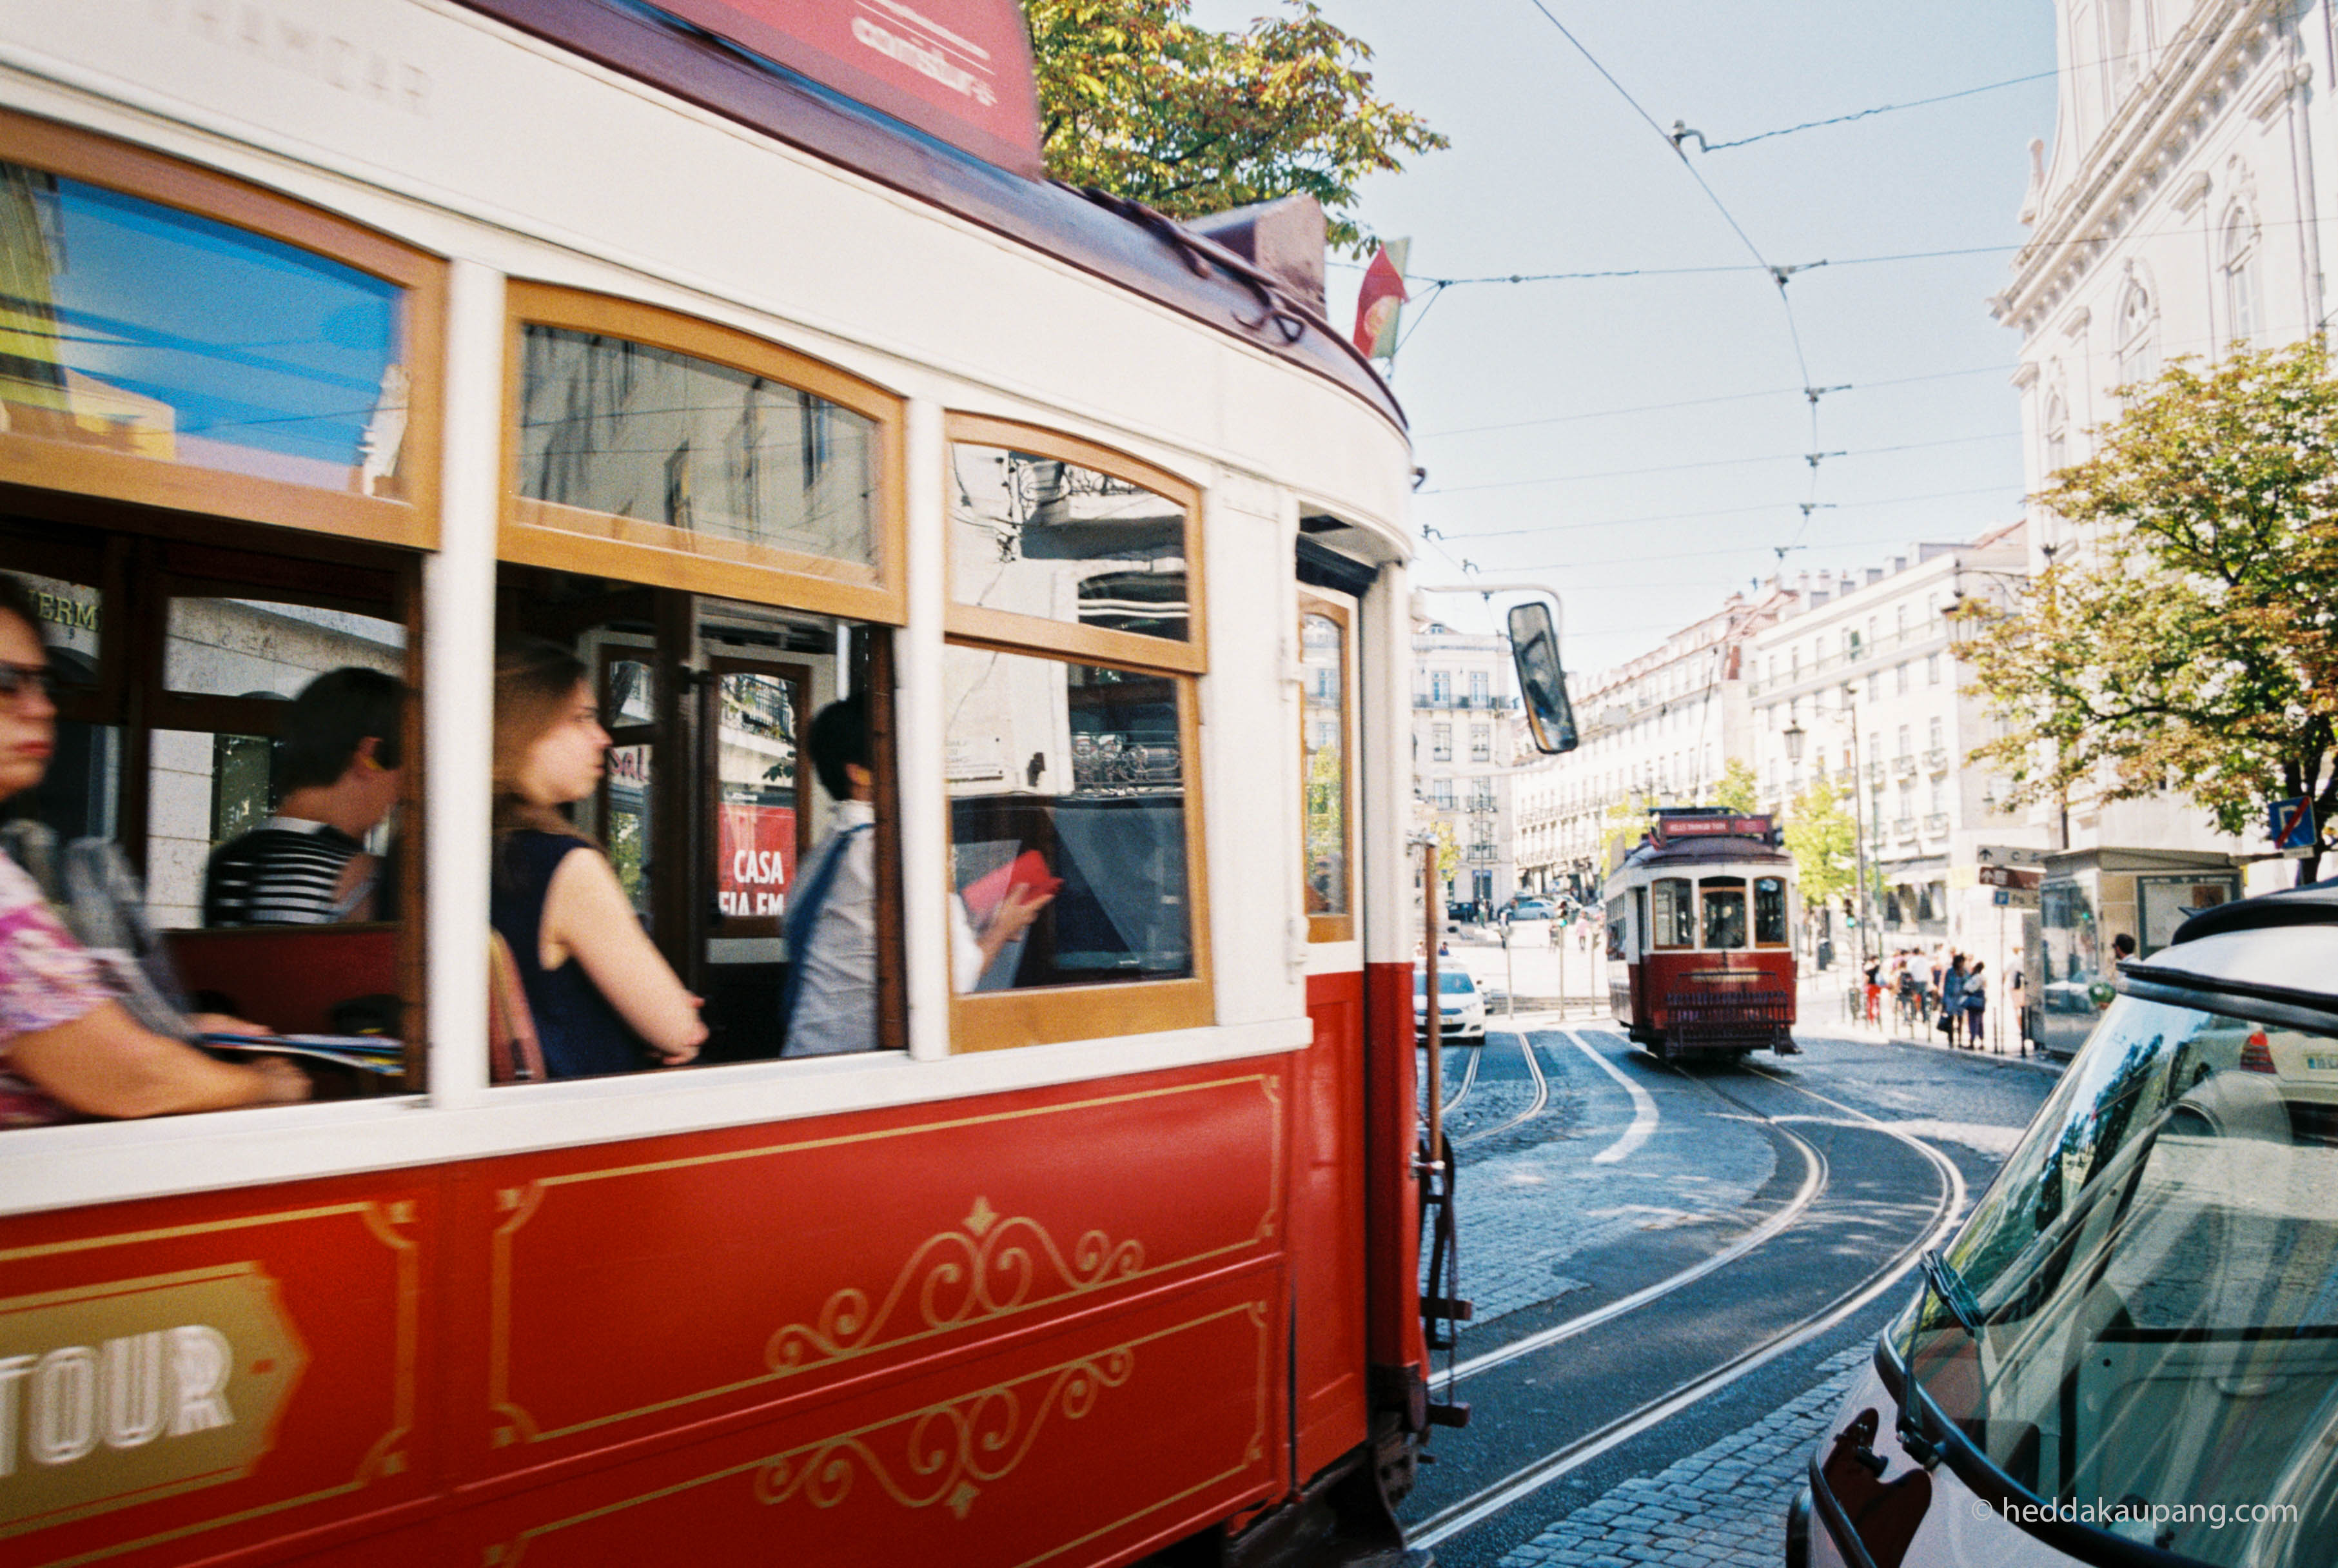 The trams in Lisbon